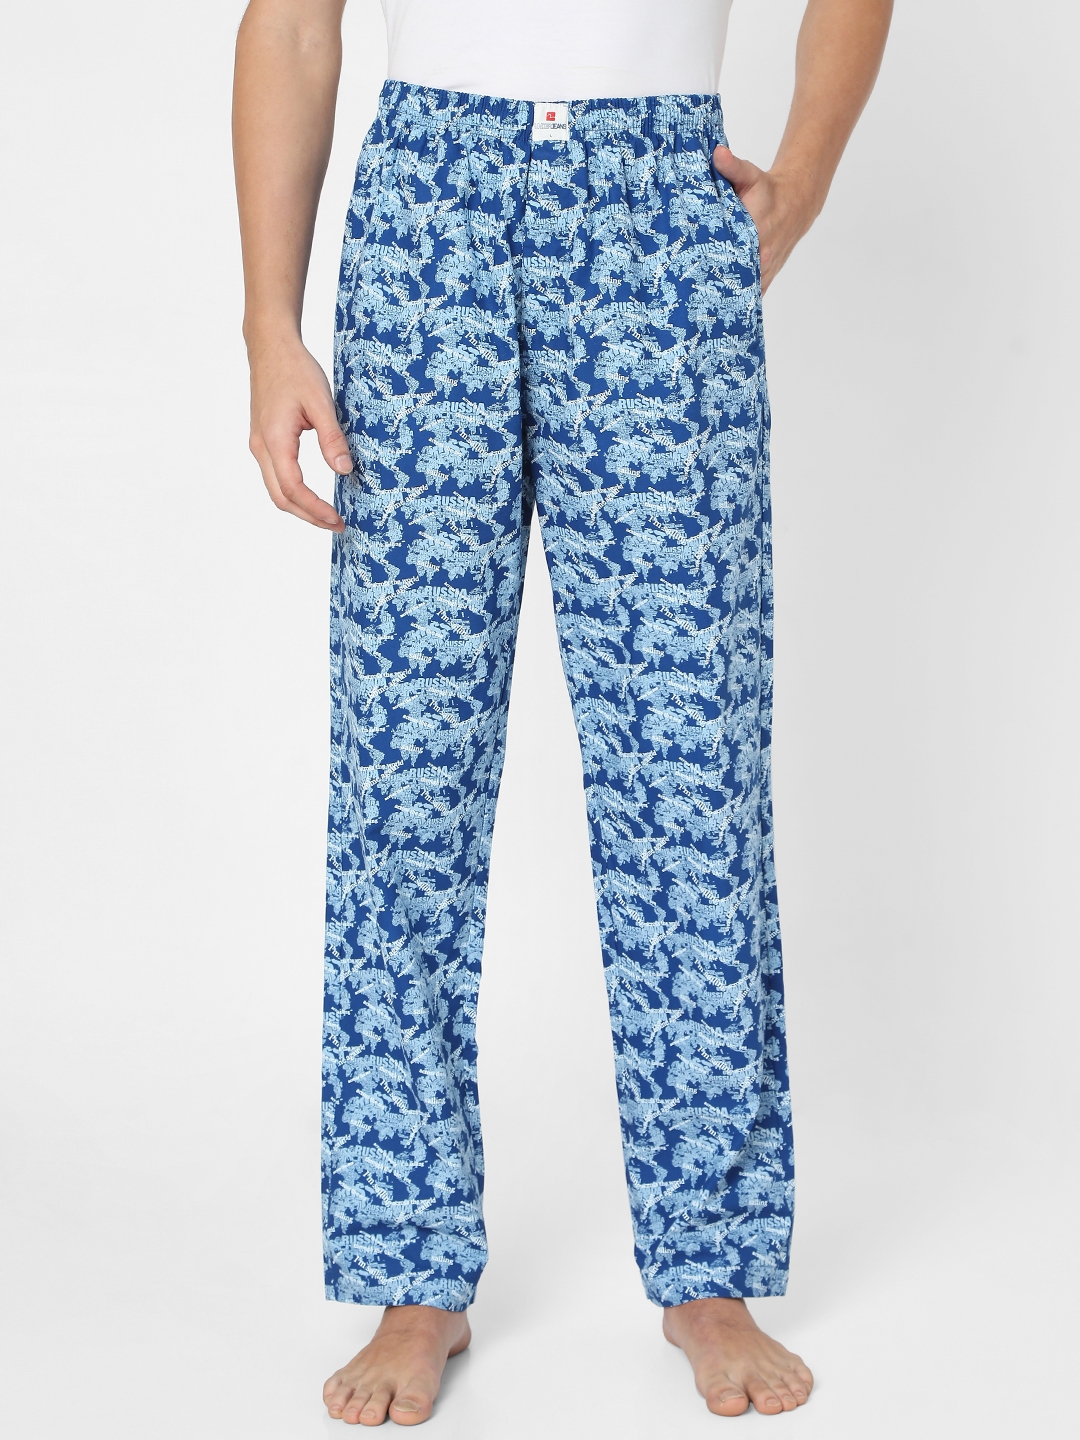 Underjeans by Spykar Blue Cotton Blend Regular Fit Pyjama